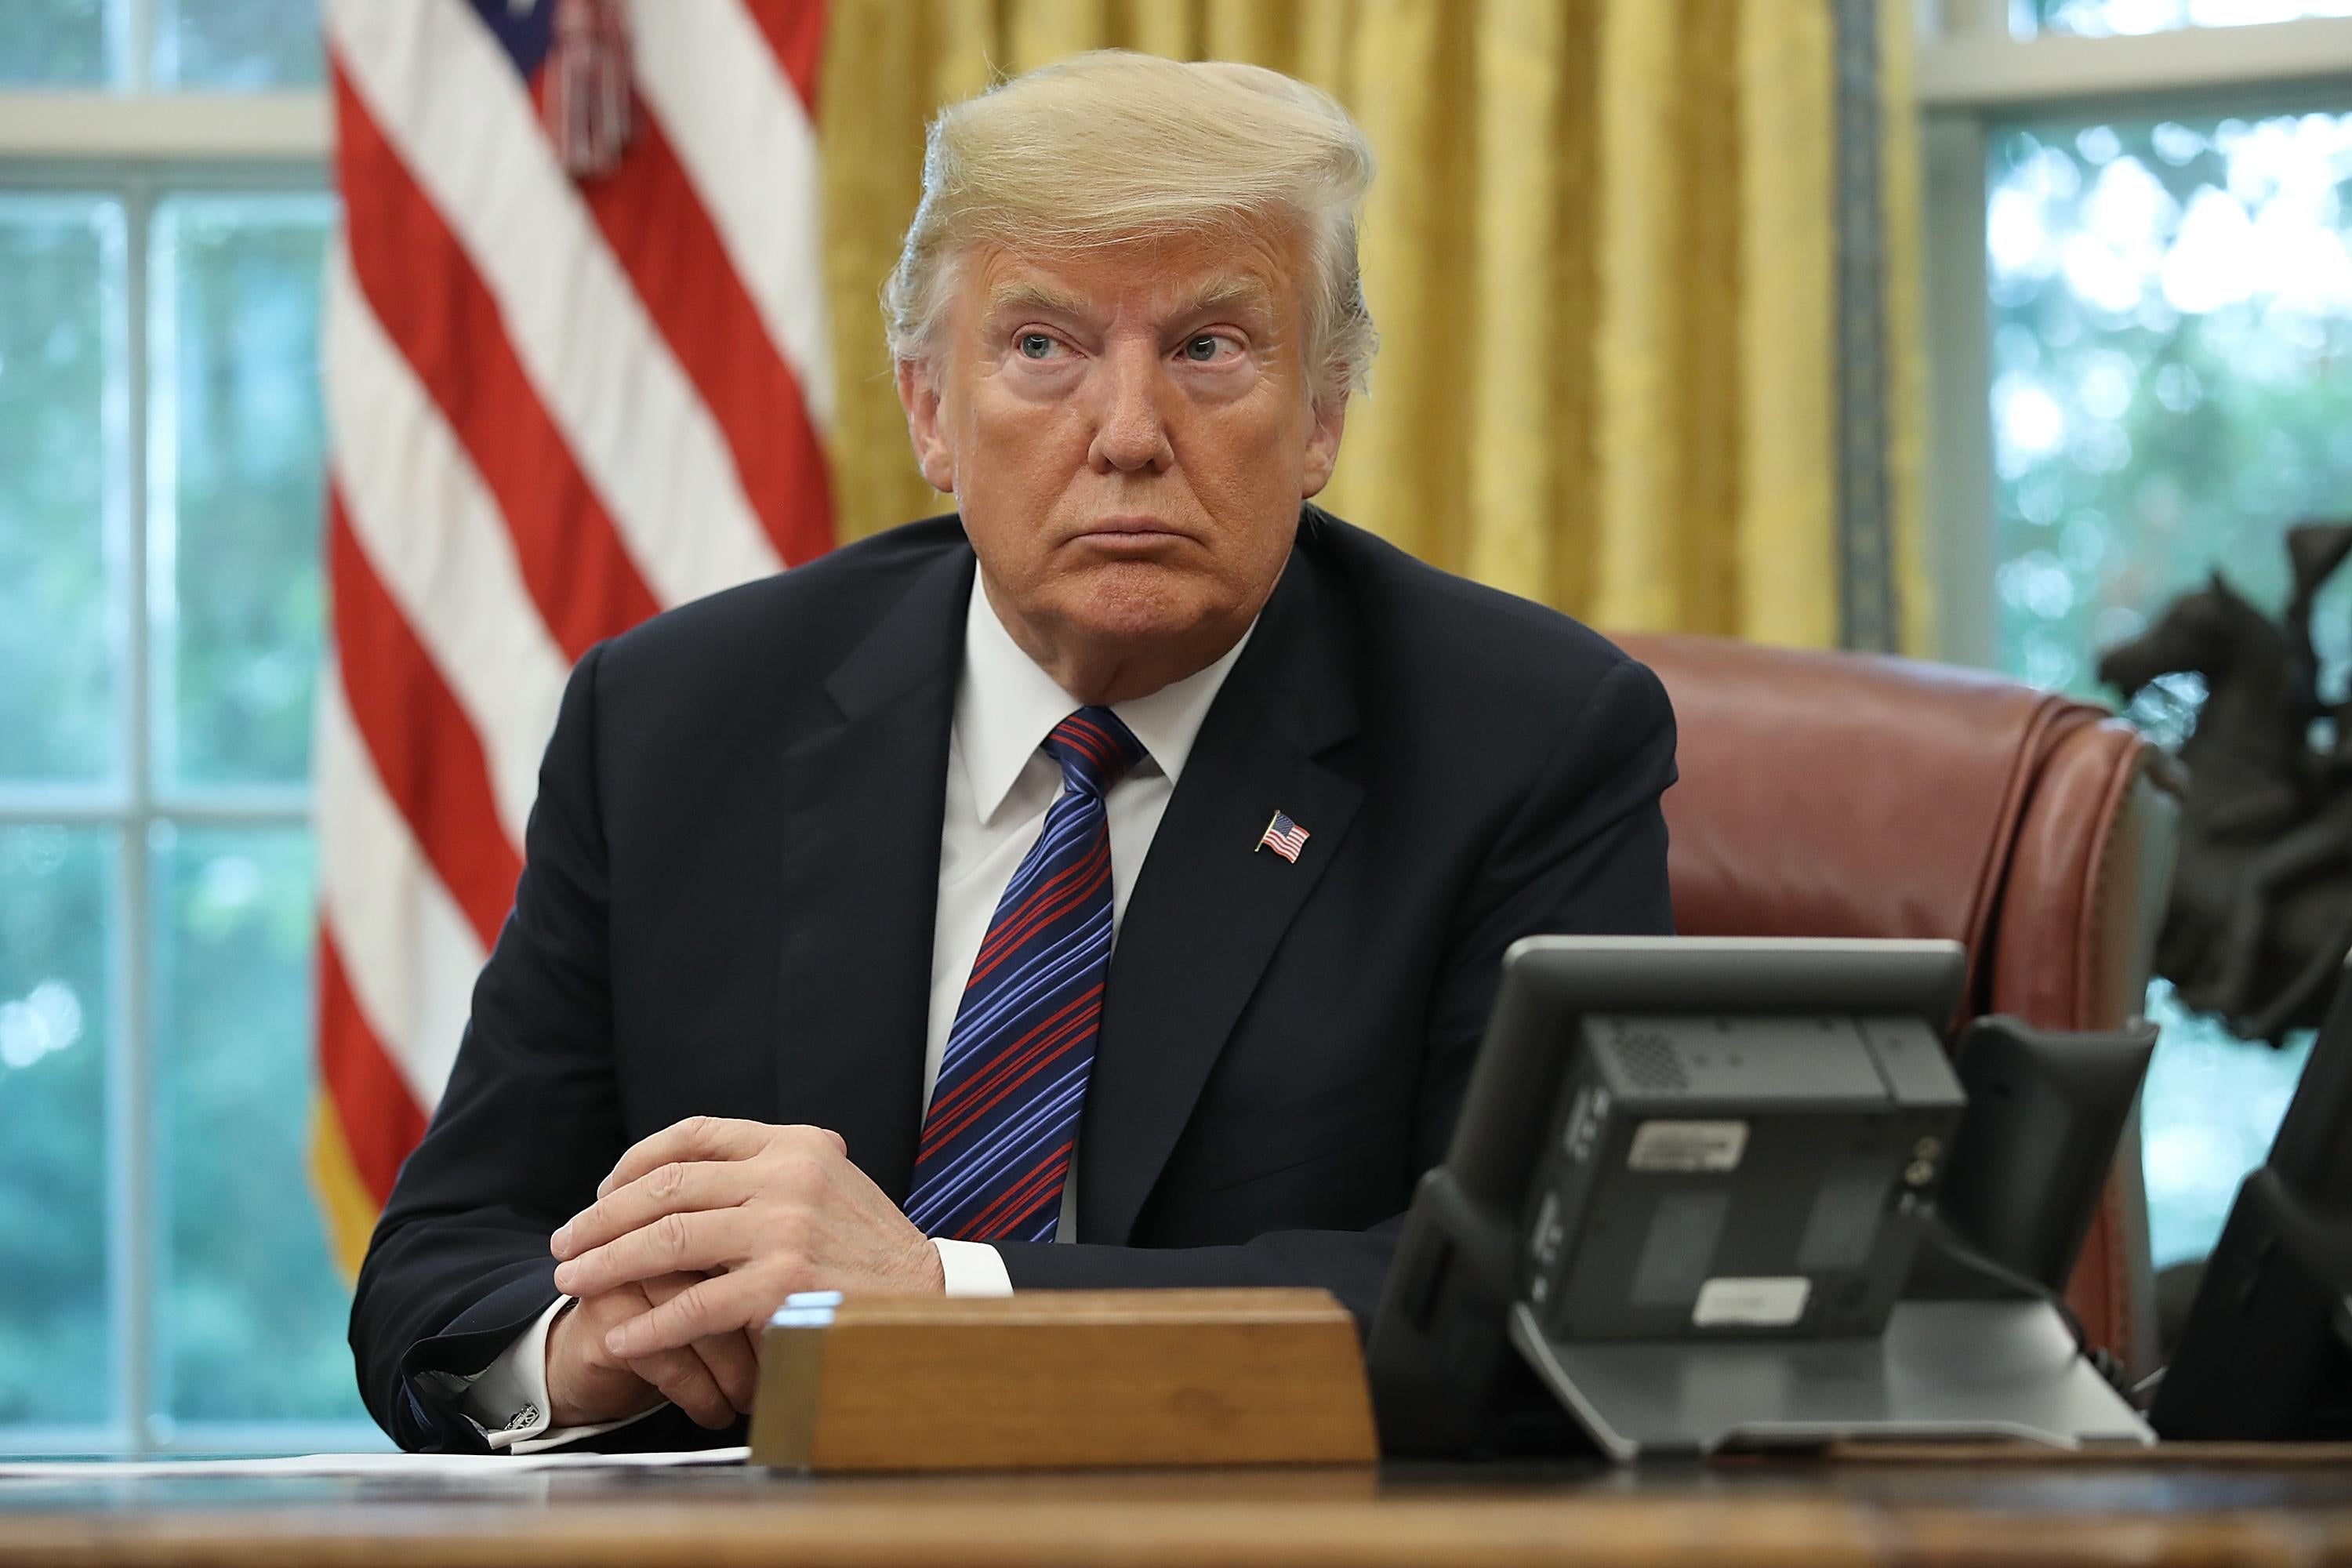 President Trump speaks on the telephone via speakerphone at the desk in the Oval Office.